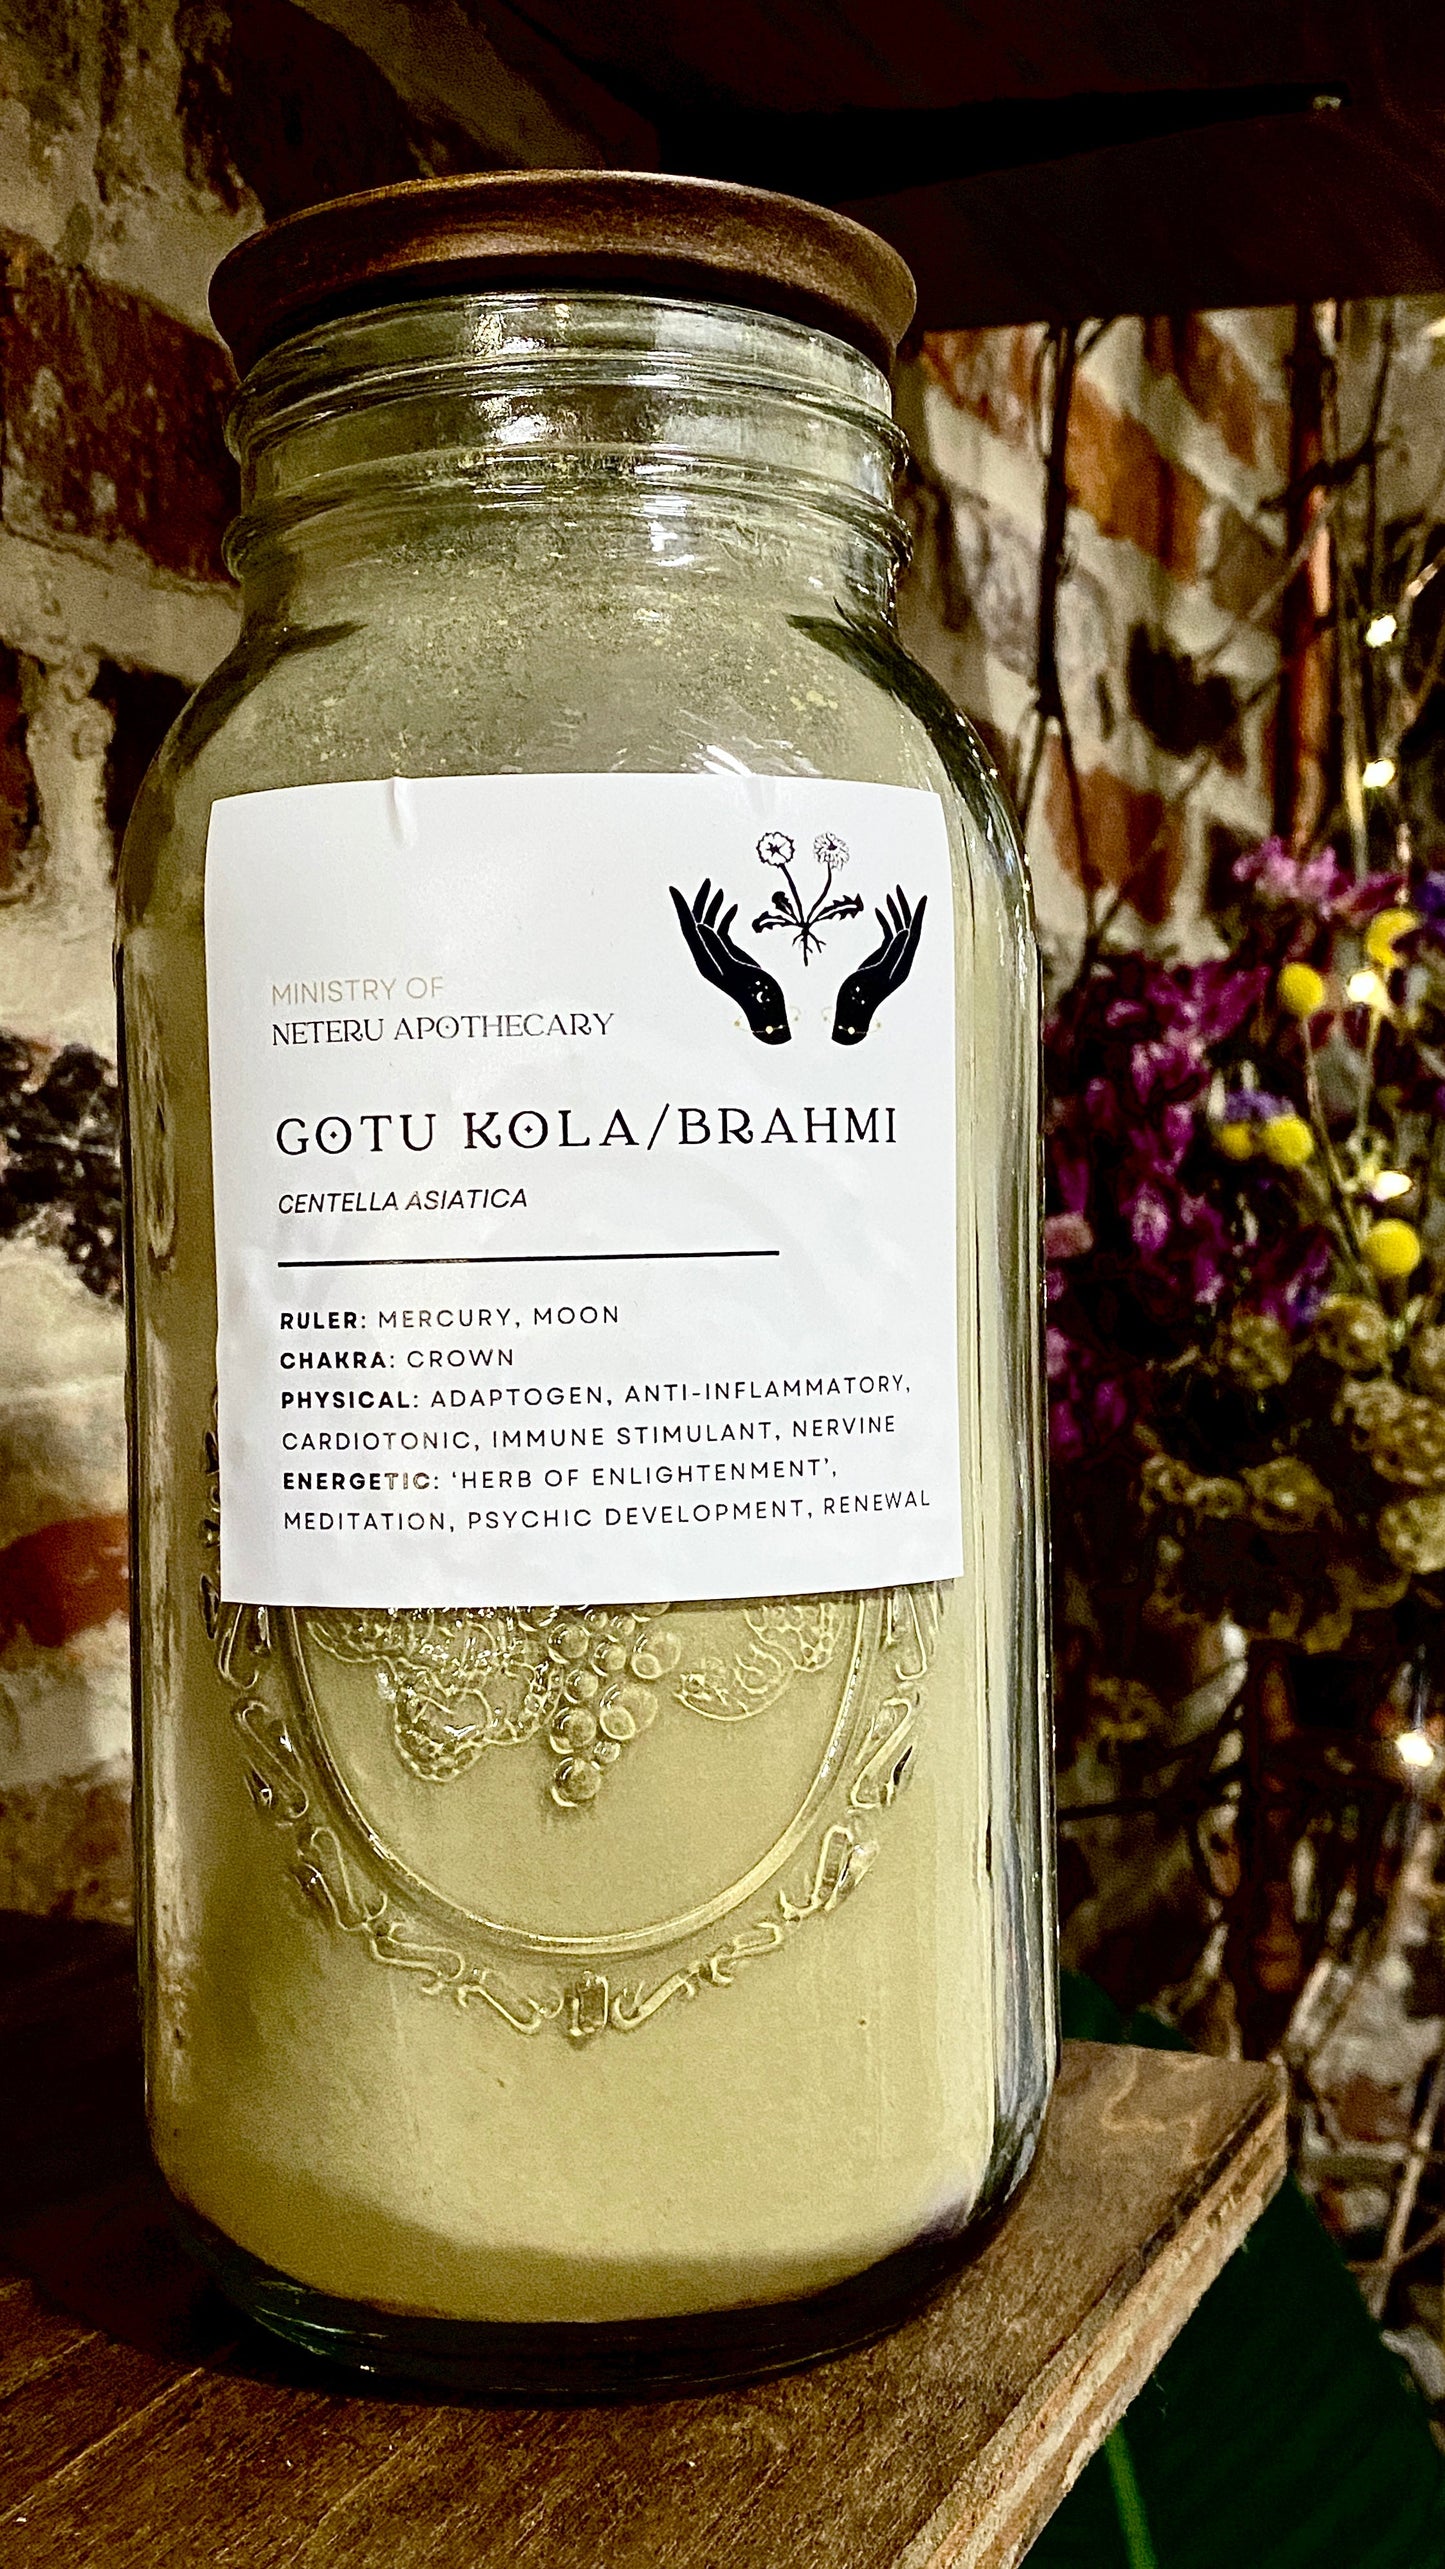 Gotu Kola/Brahmi Root Organic - Ministry of Neteru Apothecary